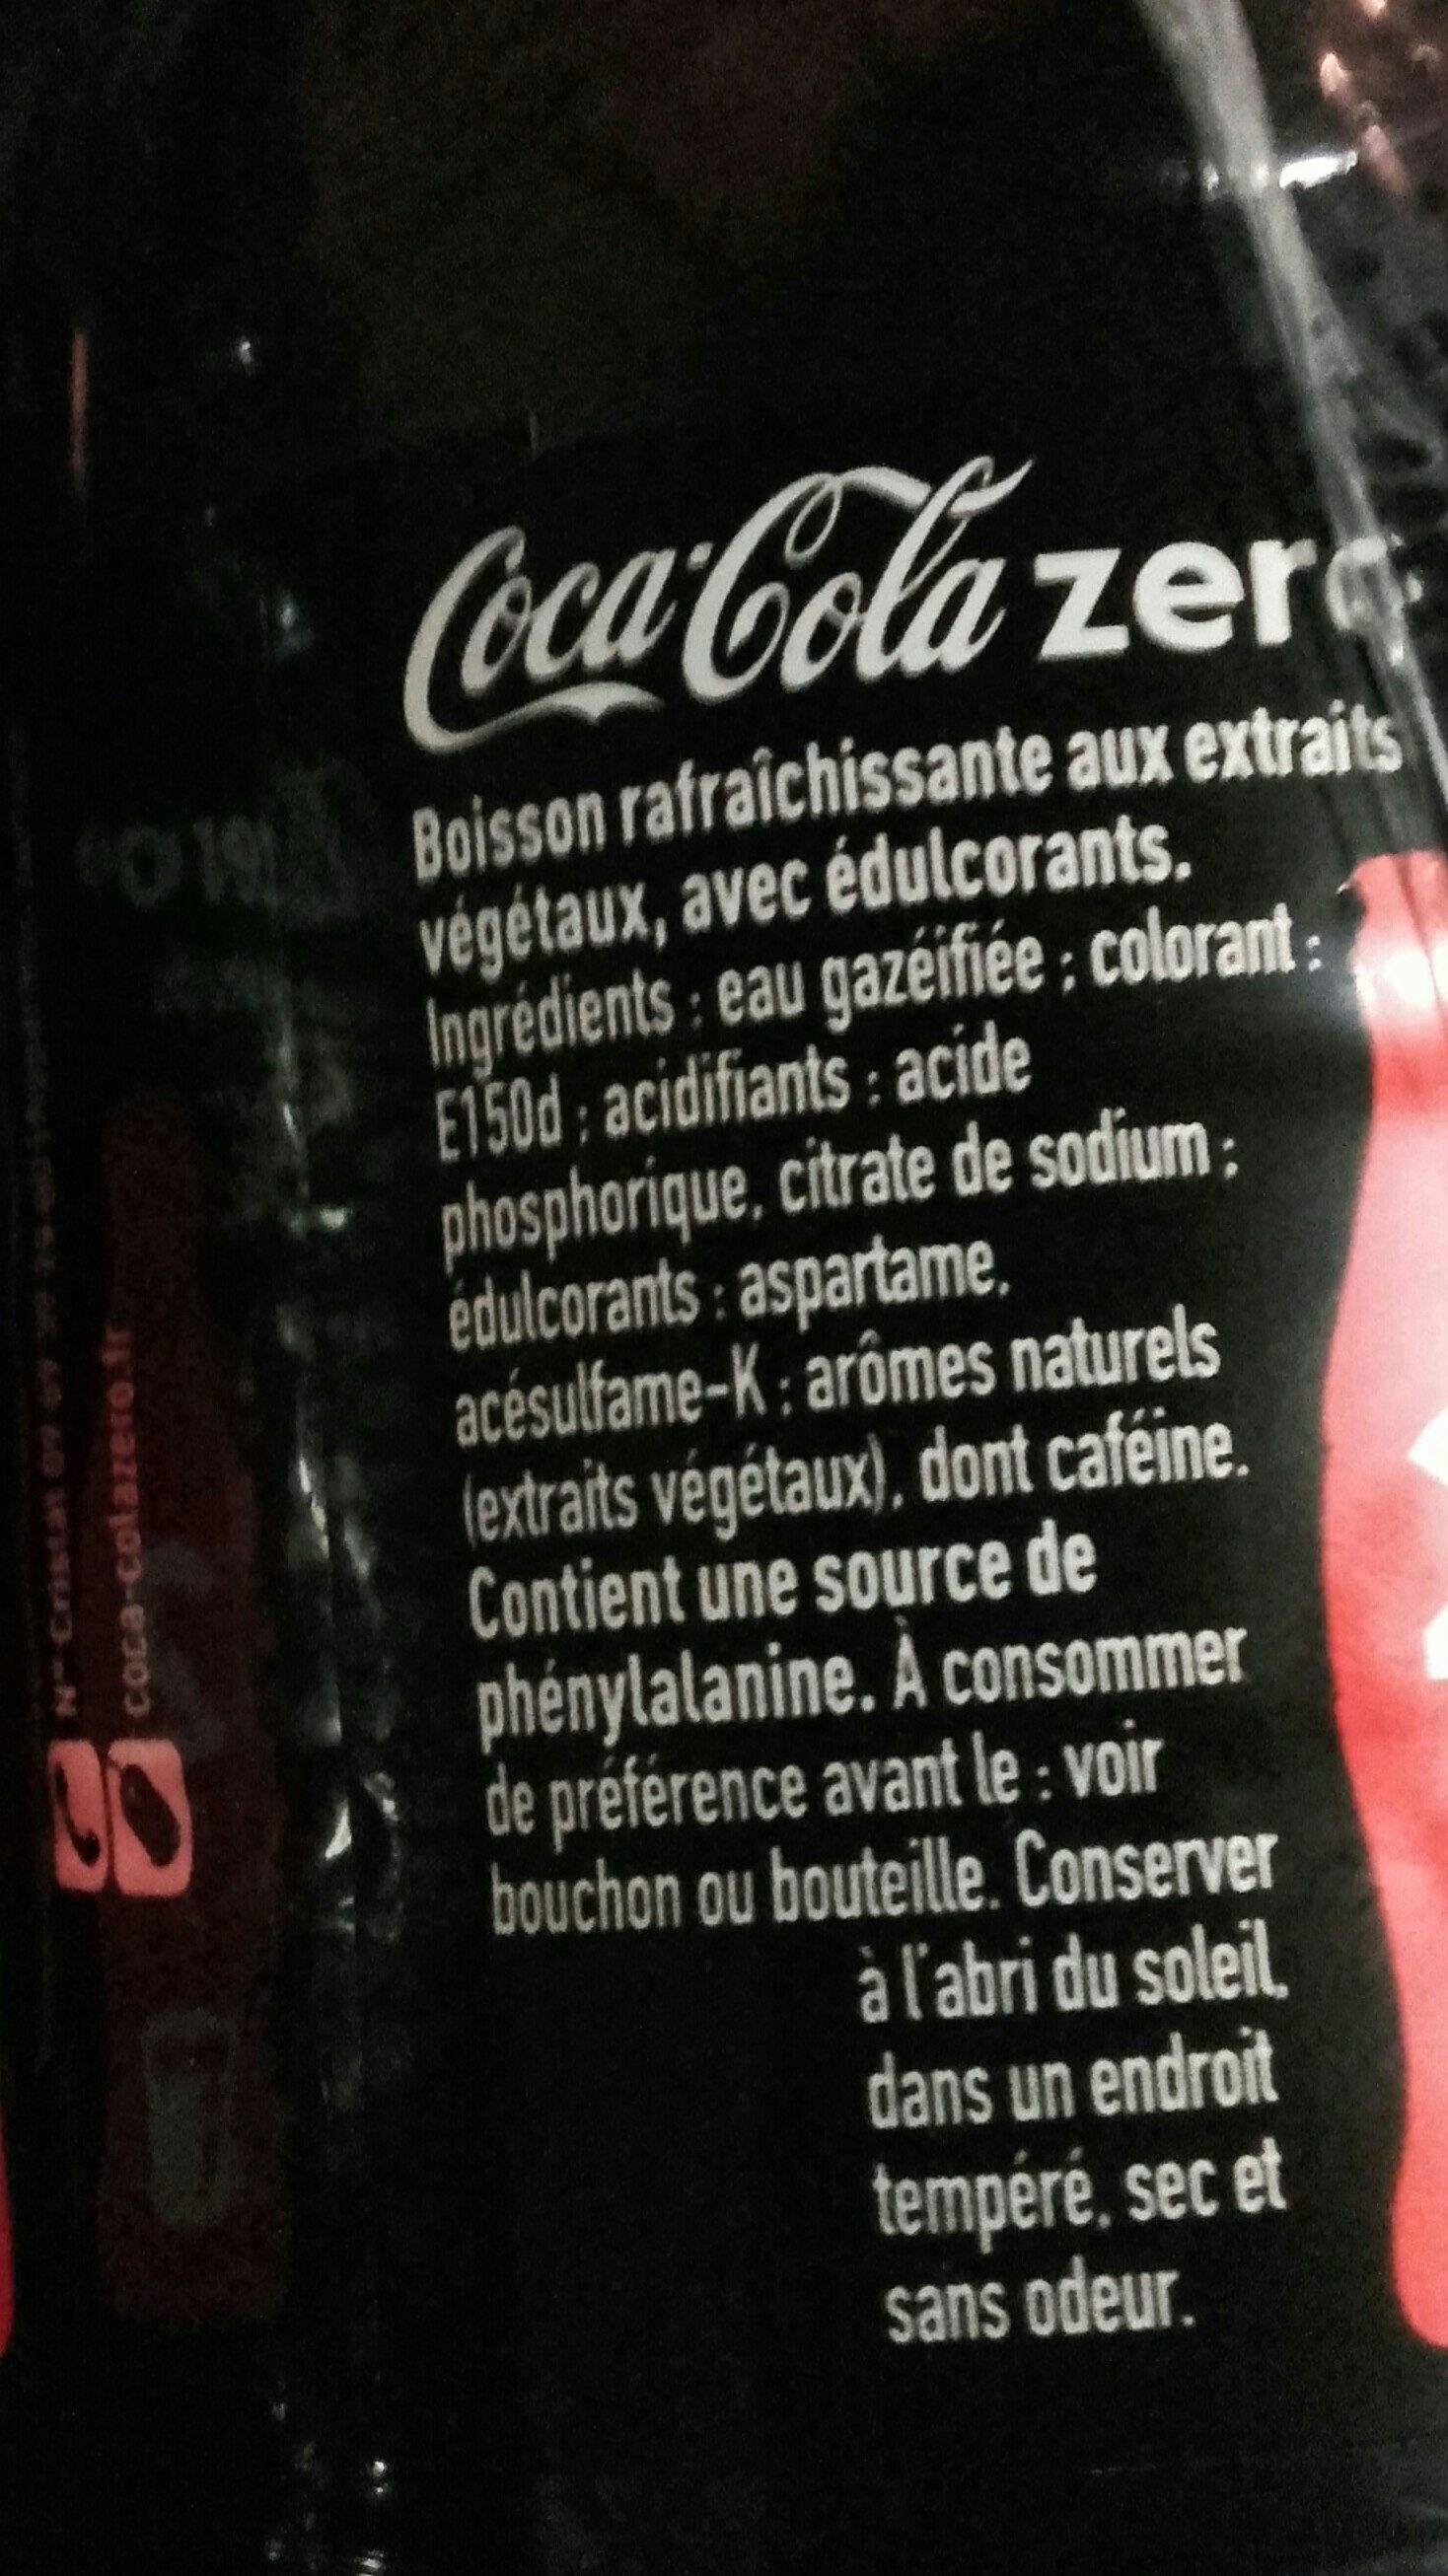 Coca cola zéro - Ingredients - fr